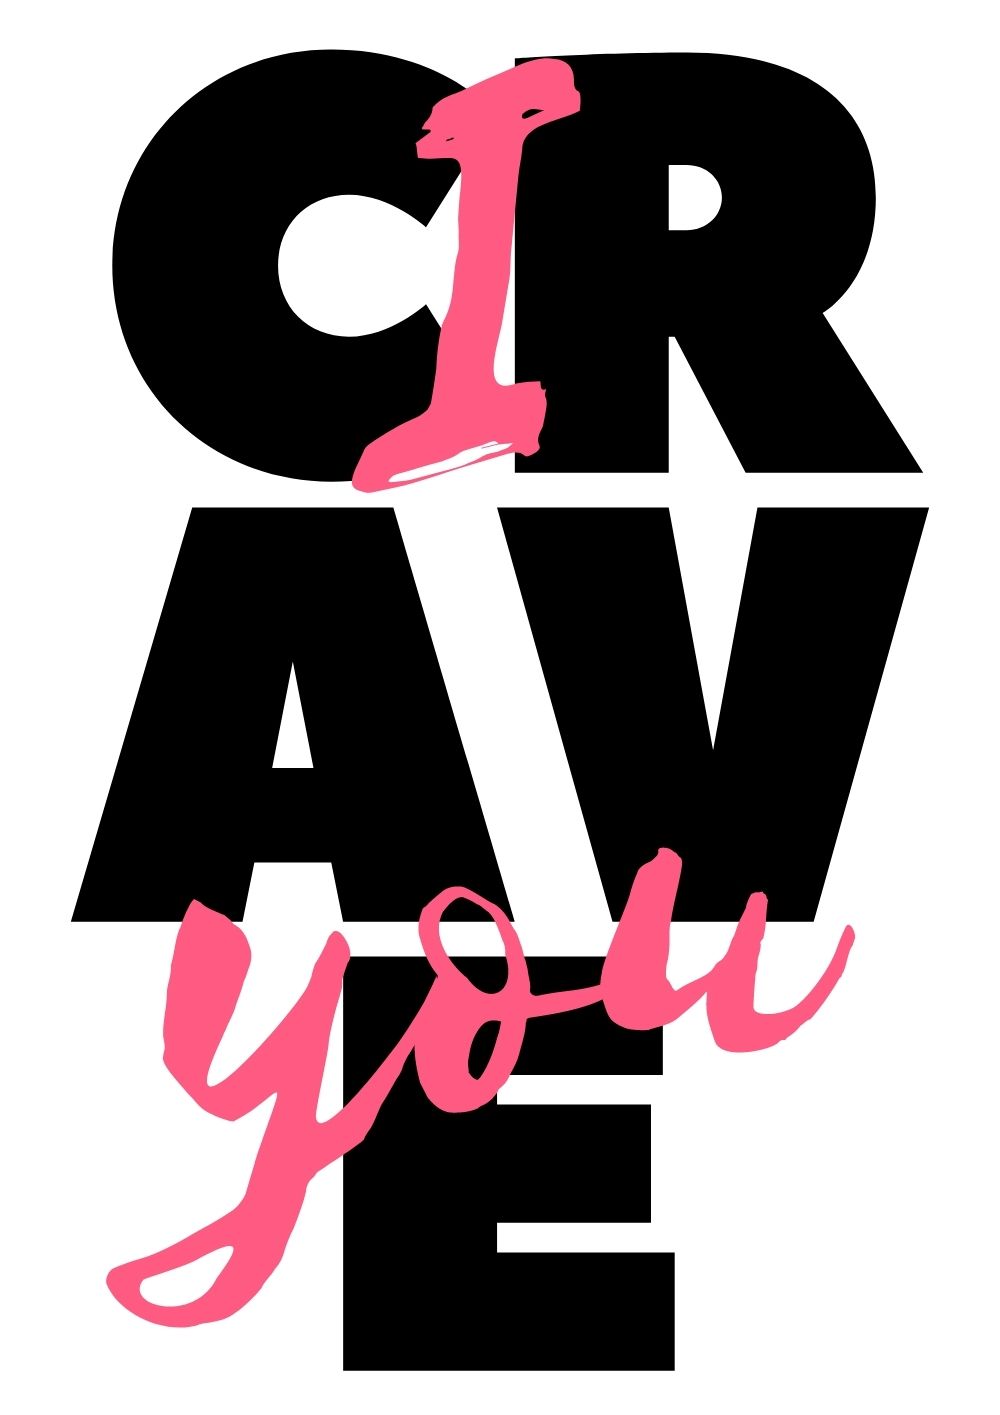 i crave you